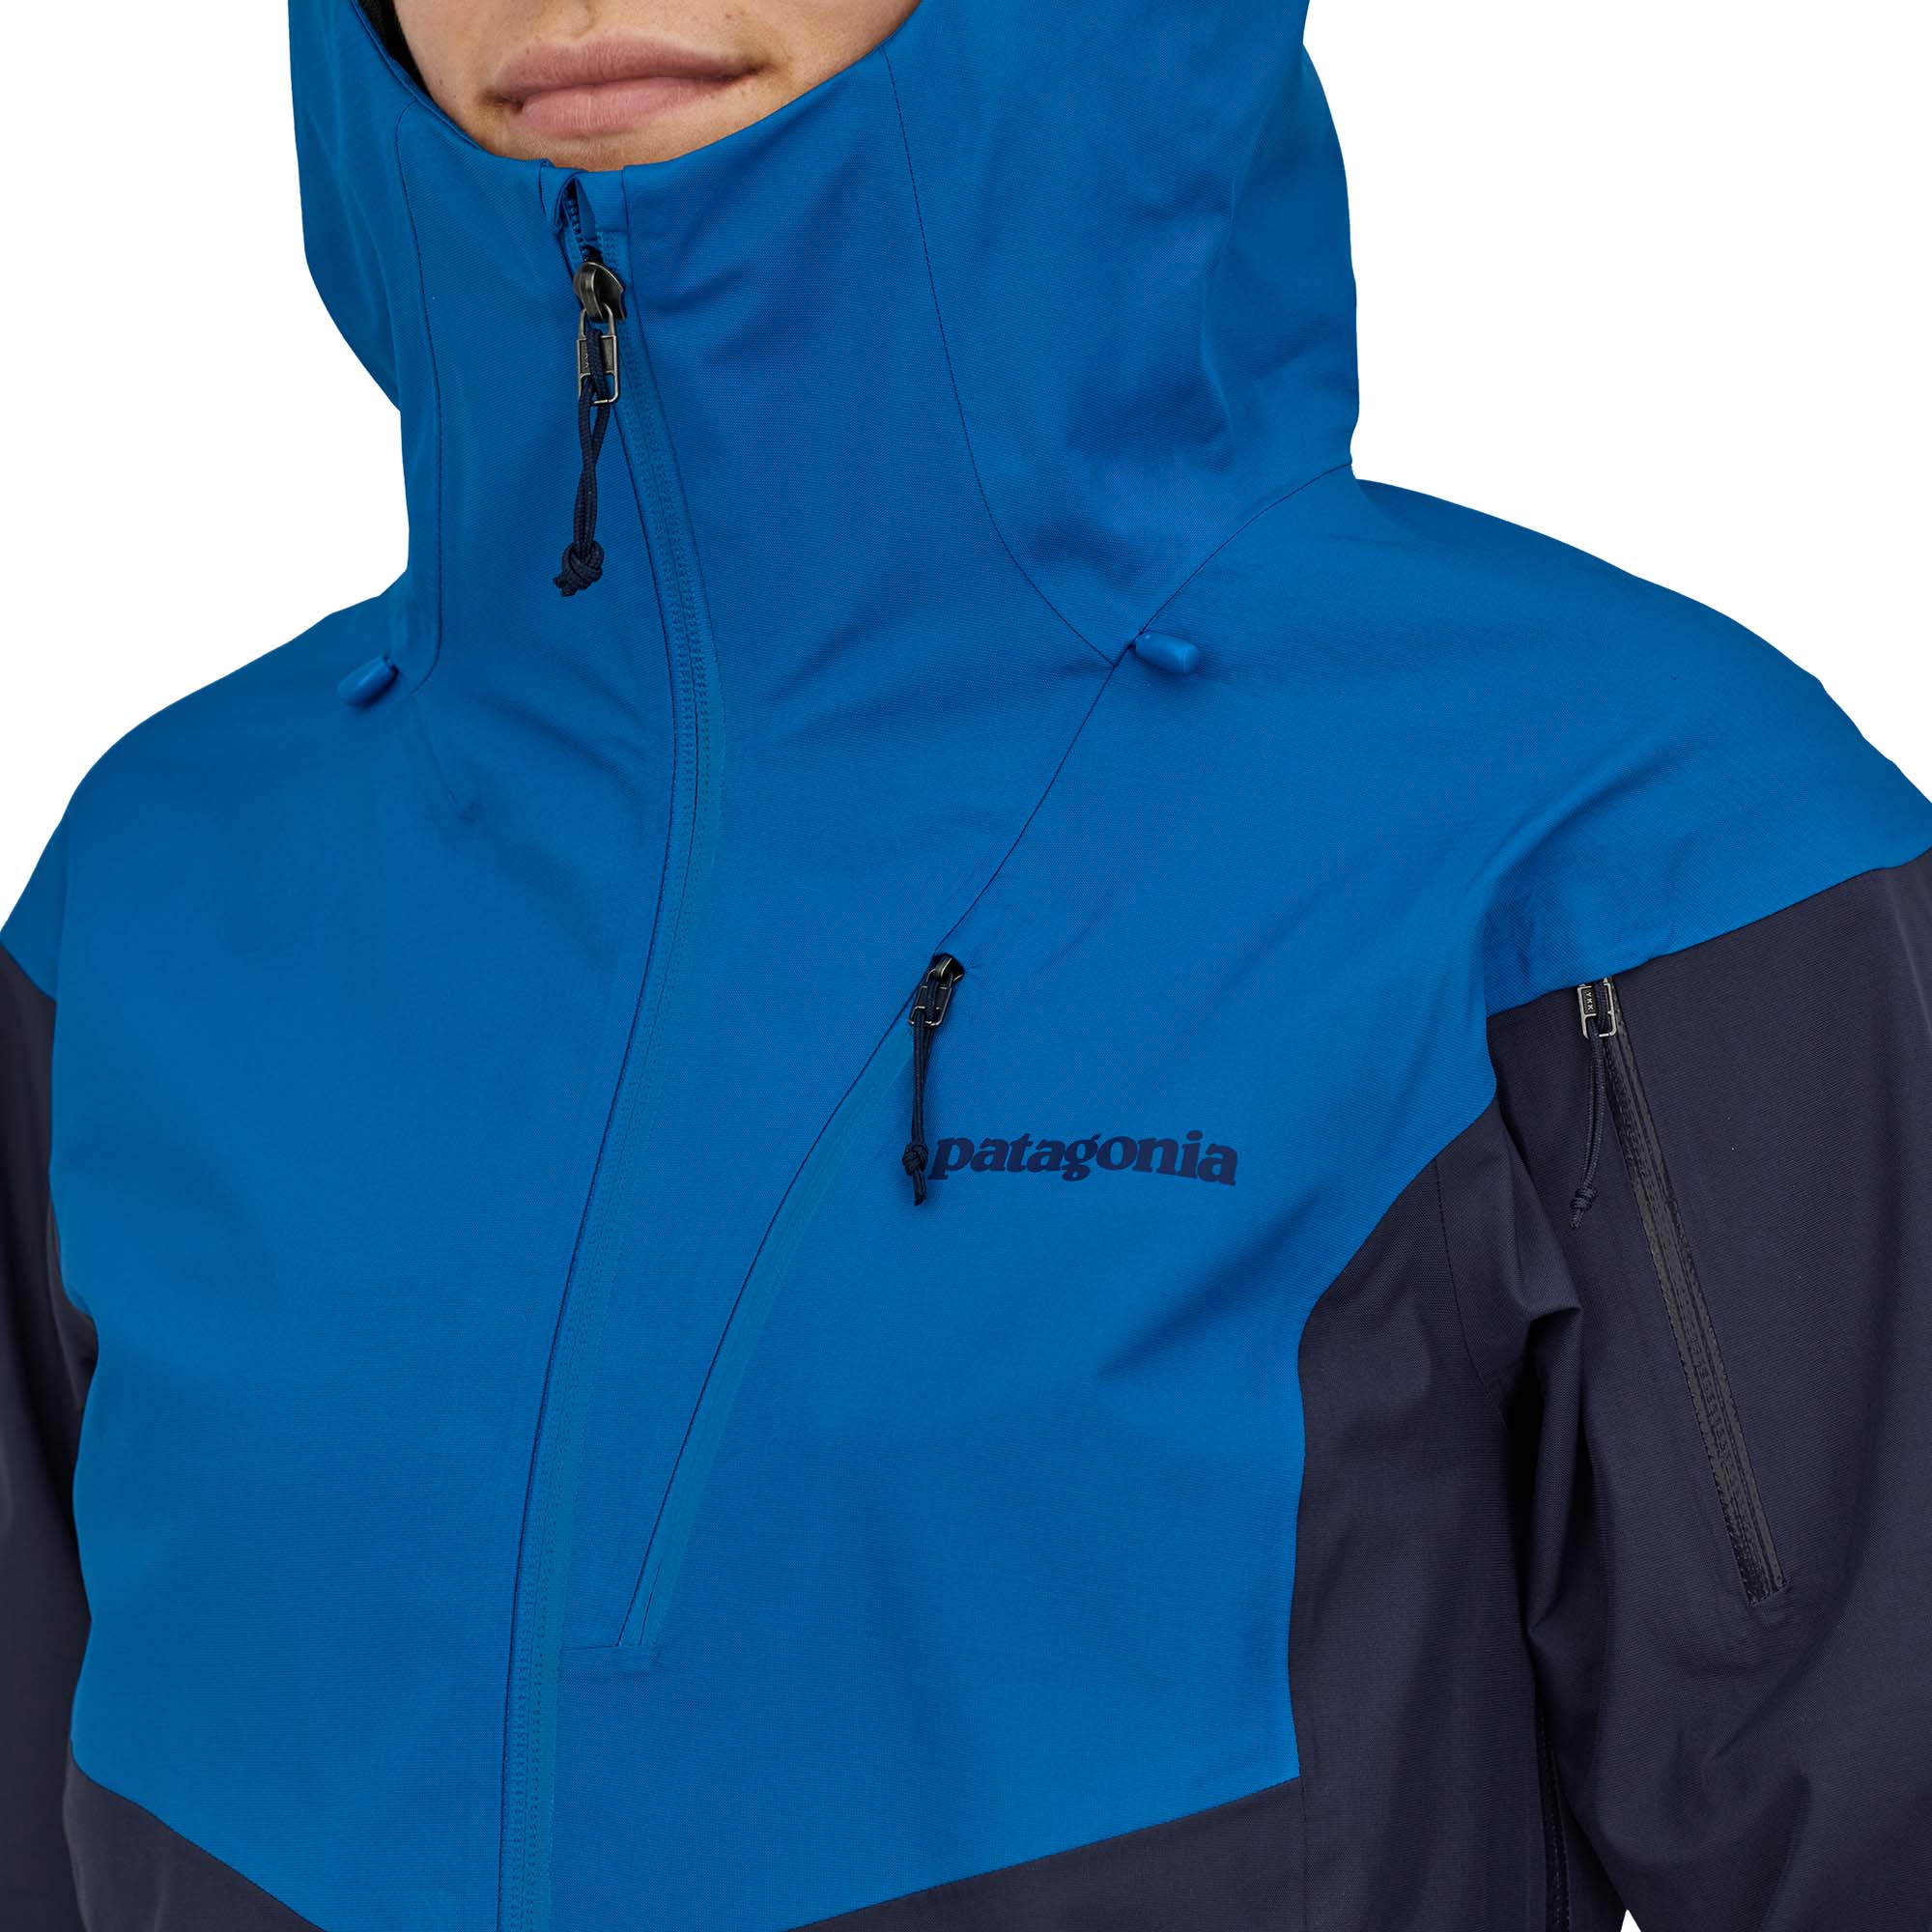 Patagonia SnowDrifter Women's Snow/Ski Jacket